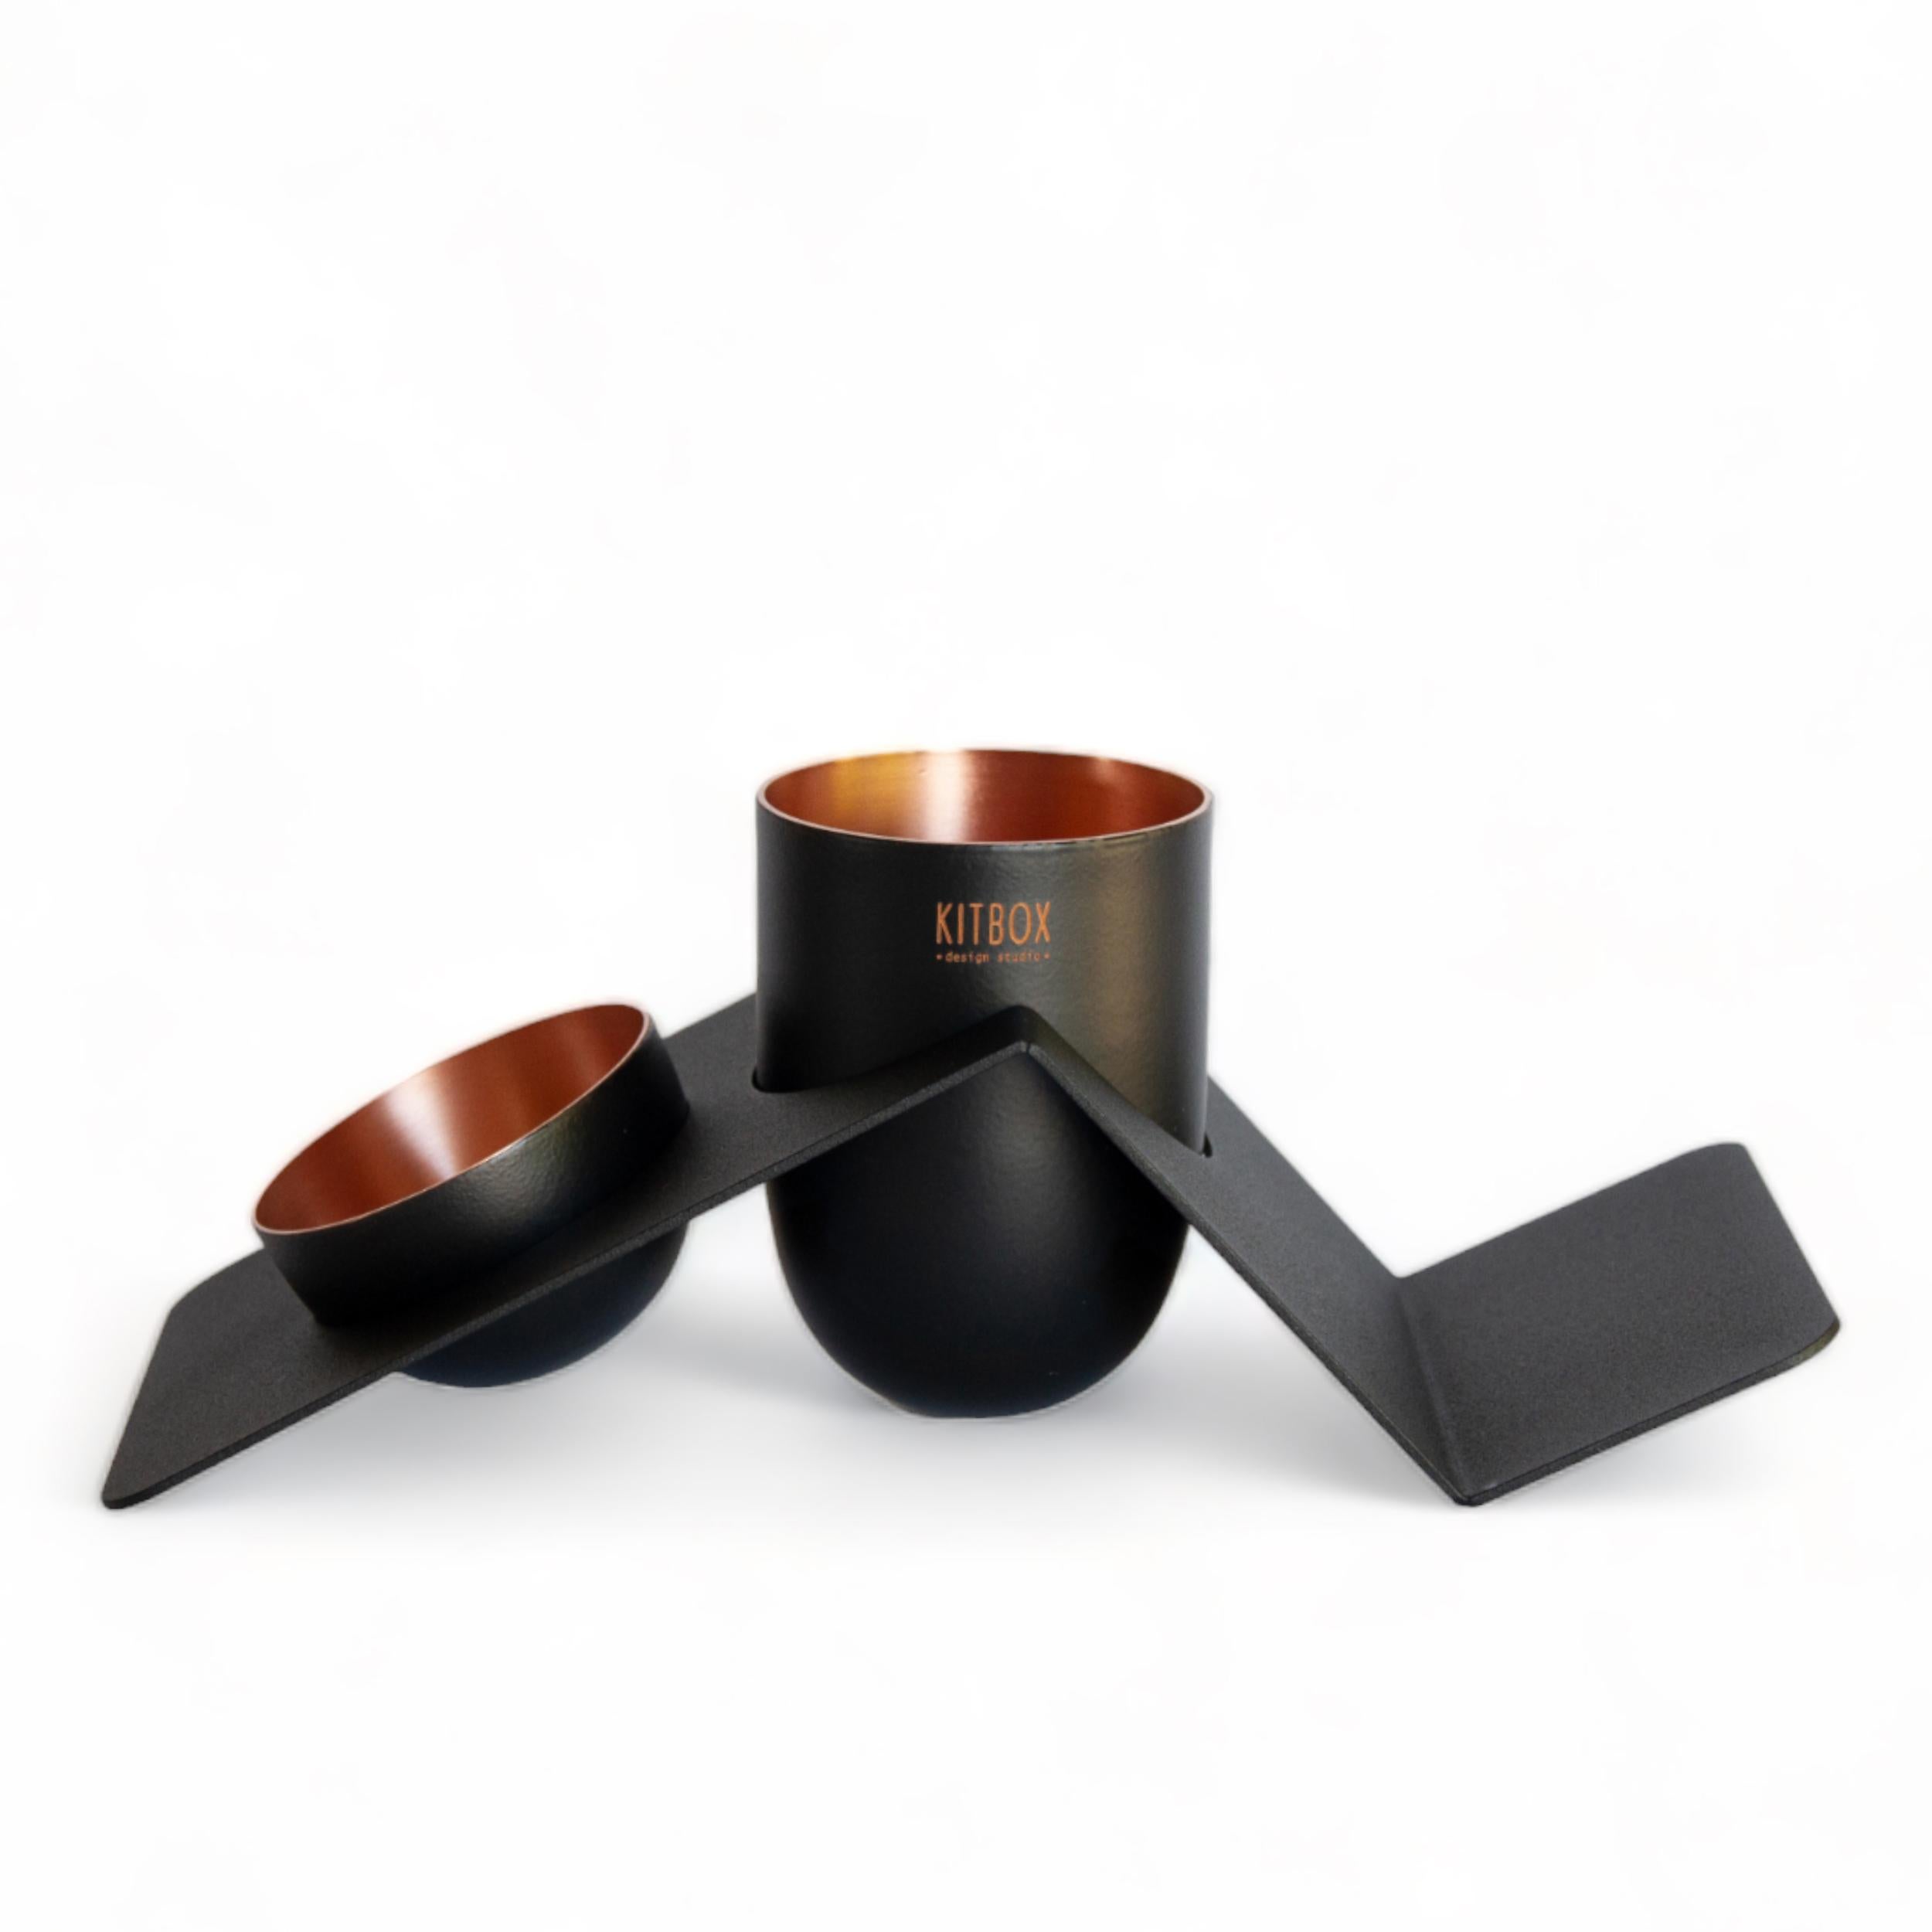 Brushed Blank Desk Organizer In Matte Black Coated Copper, Noir Edition, In Stock For Sale